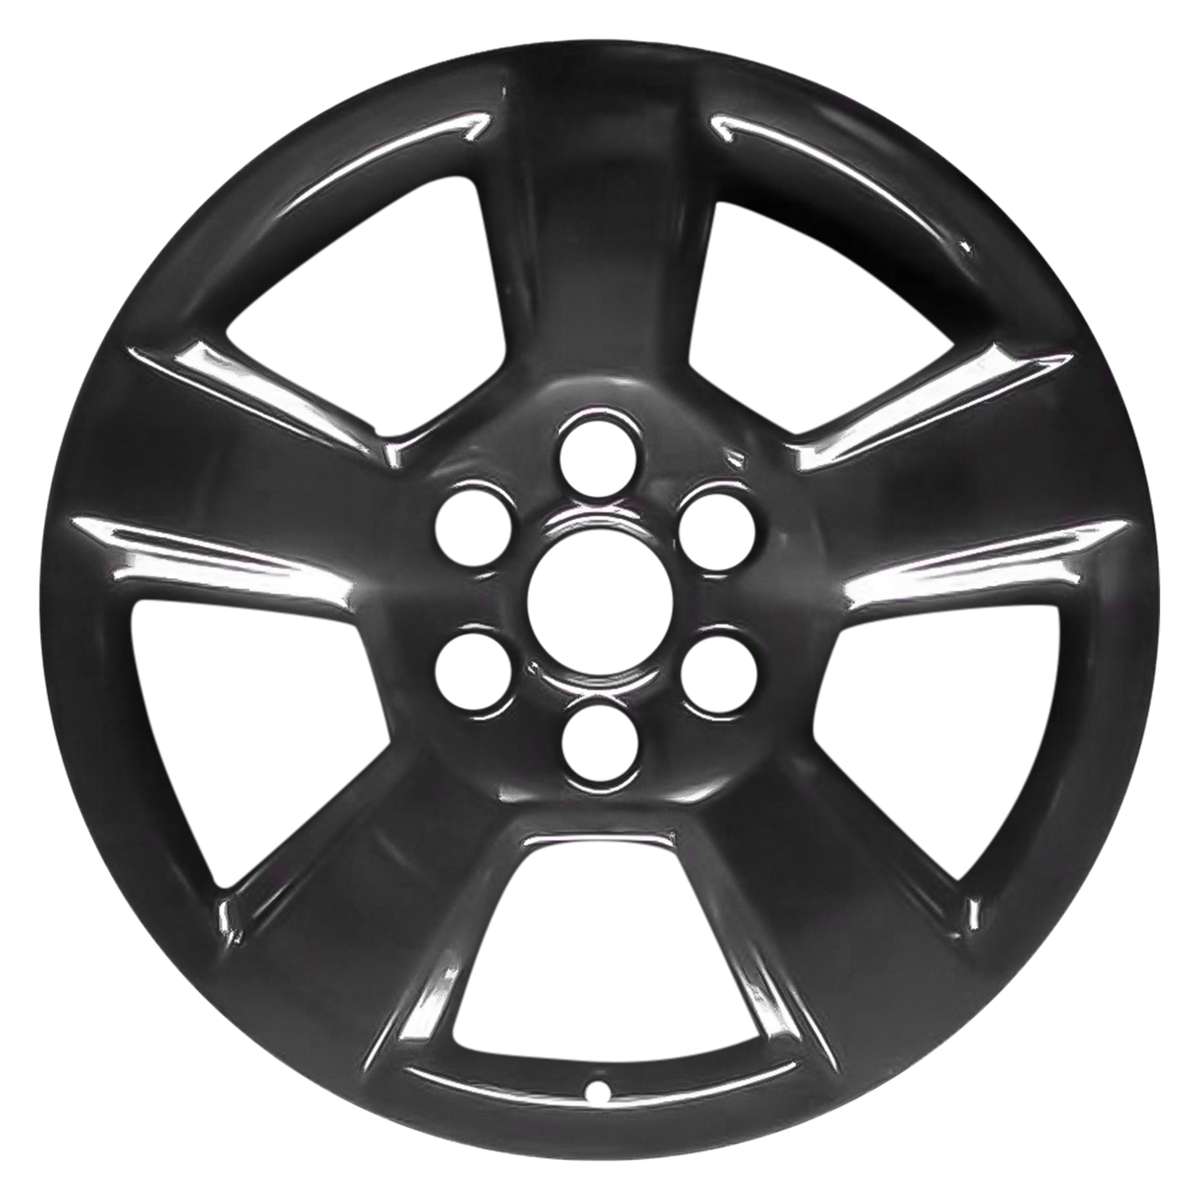 2021 GMC Yukon XL 20" OEM Wheel Rim W5754B